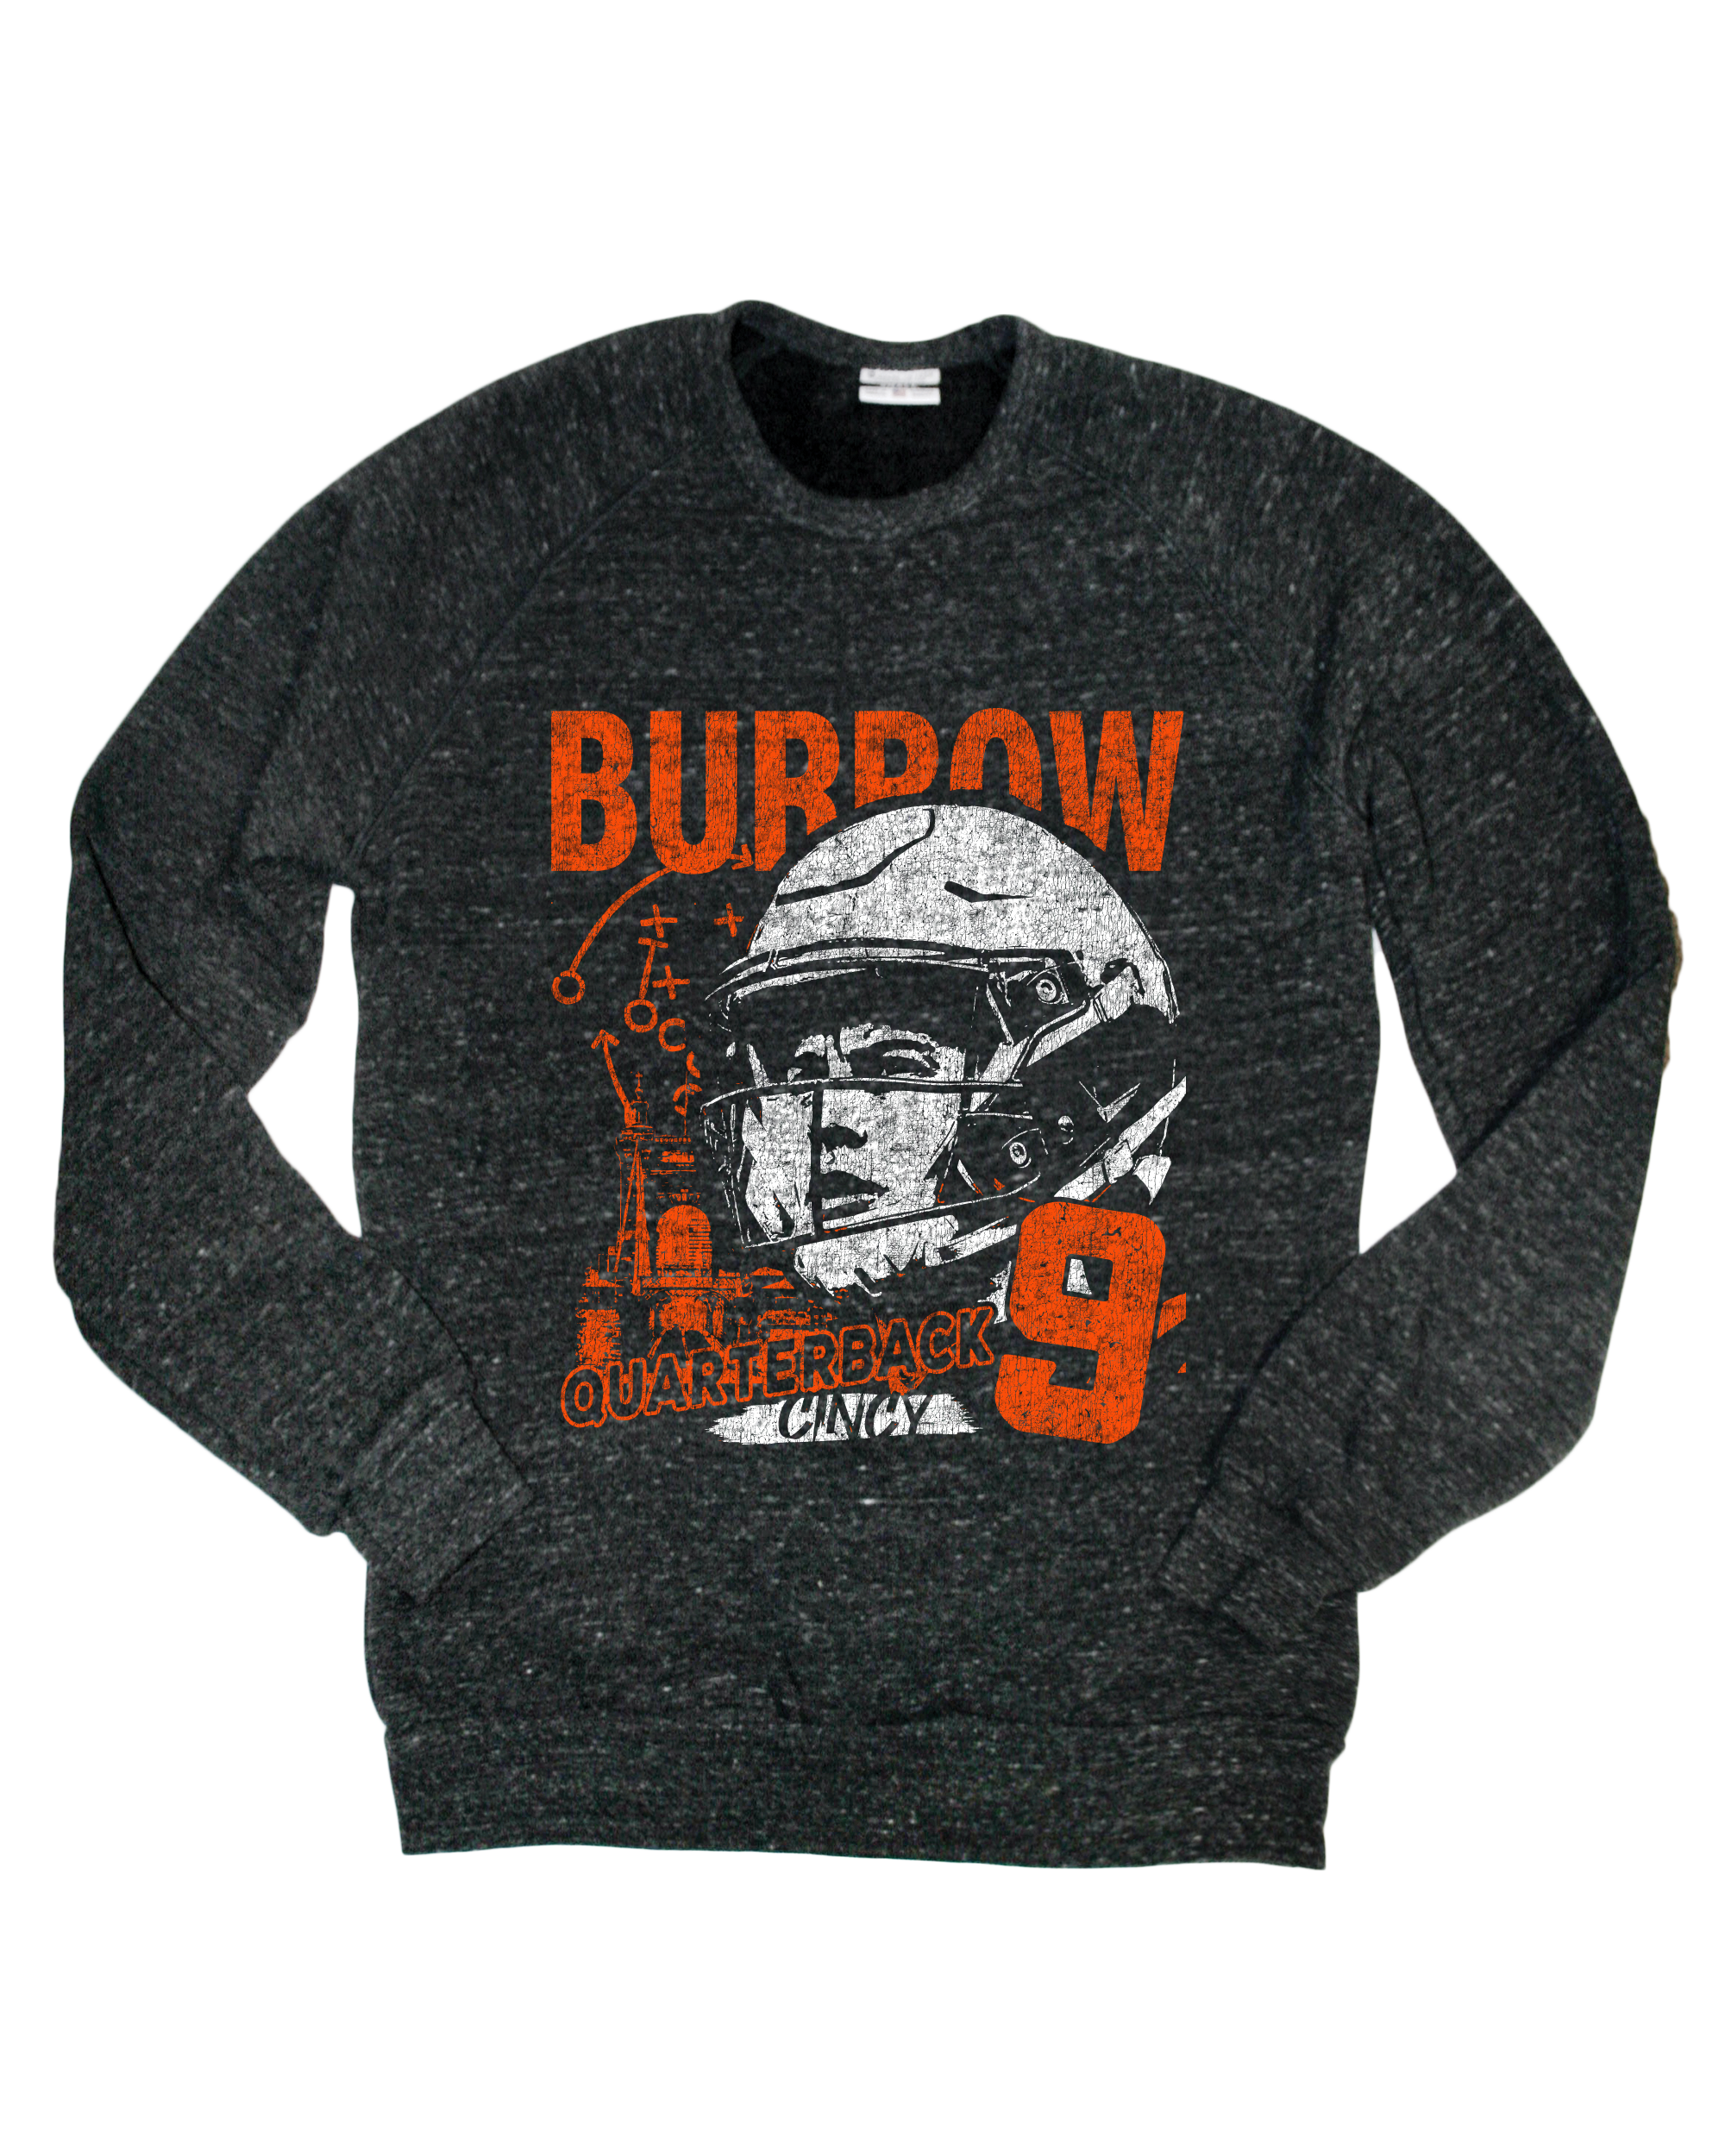 Burrow 9 Quarterback Black Sweatshirt